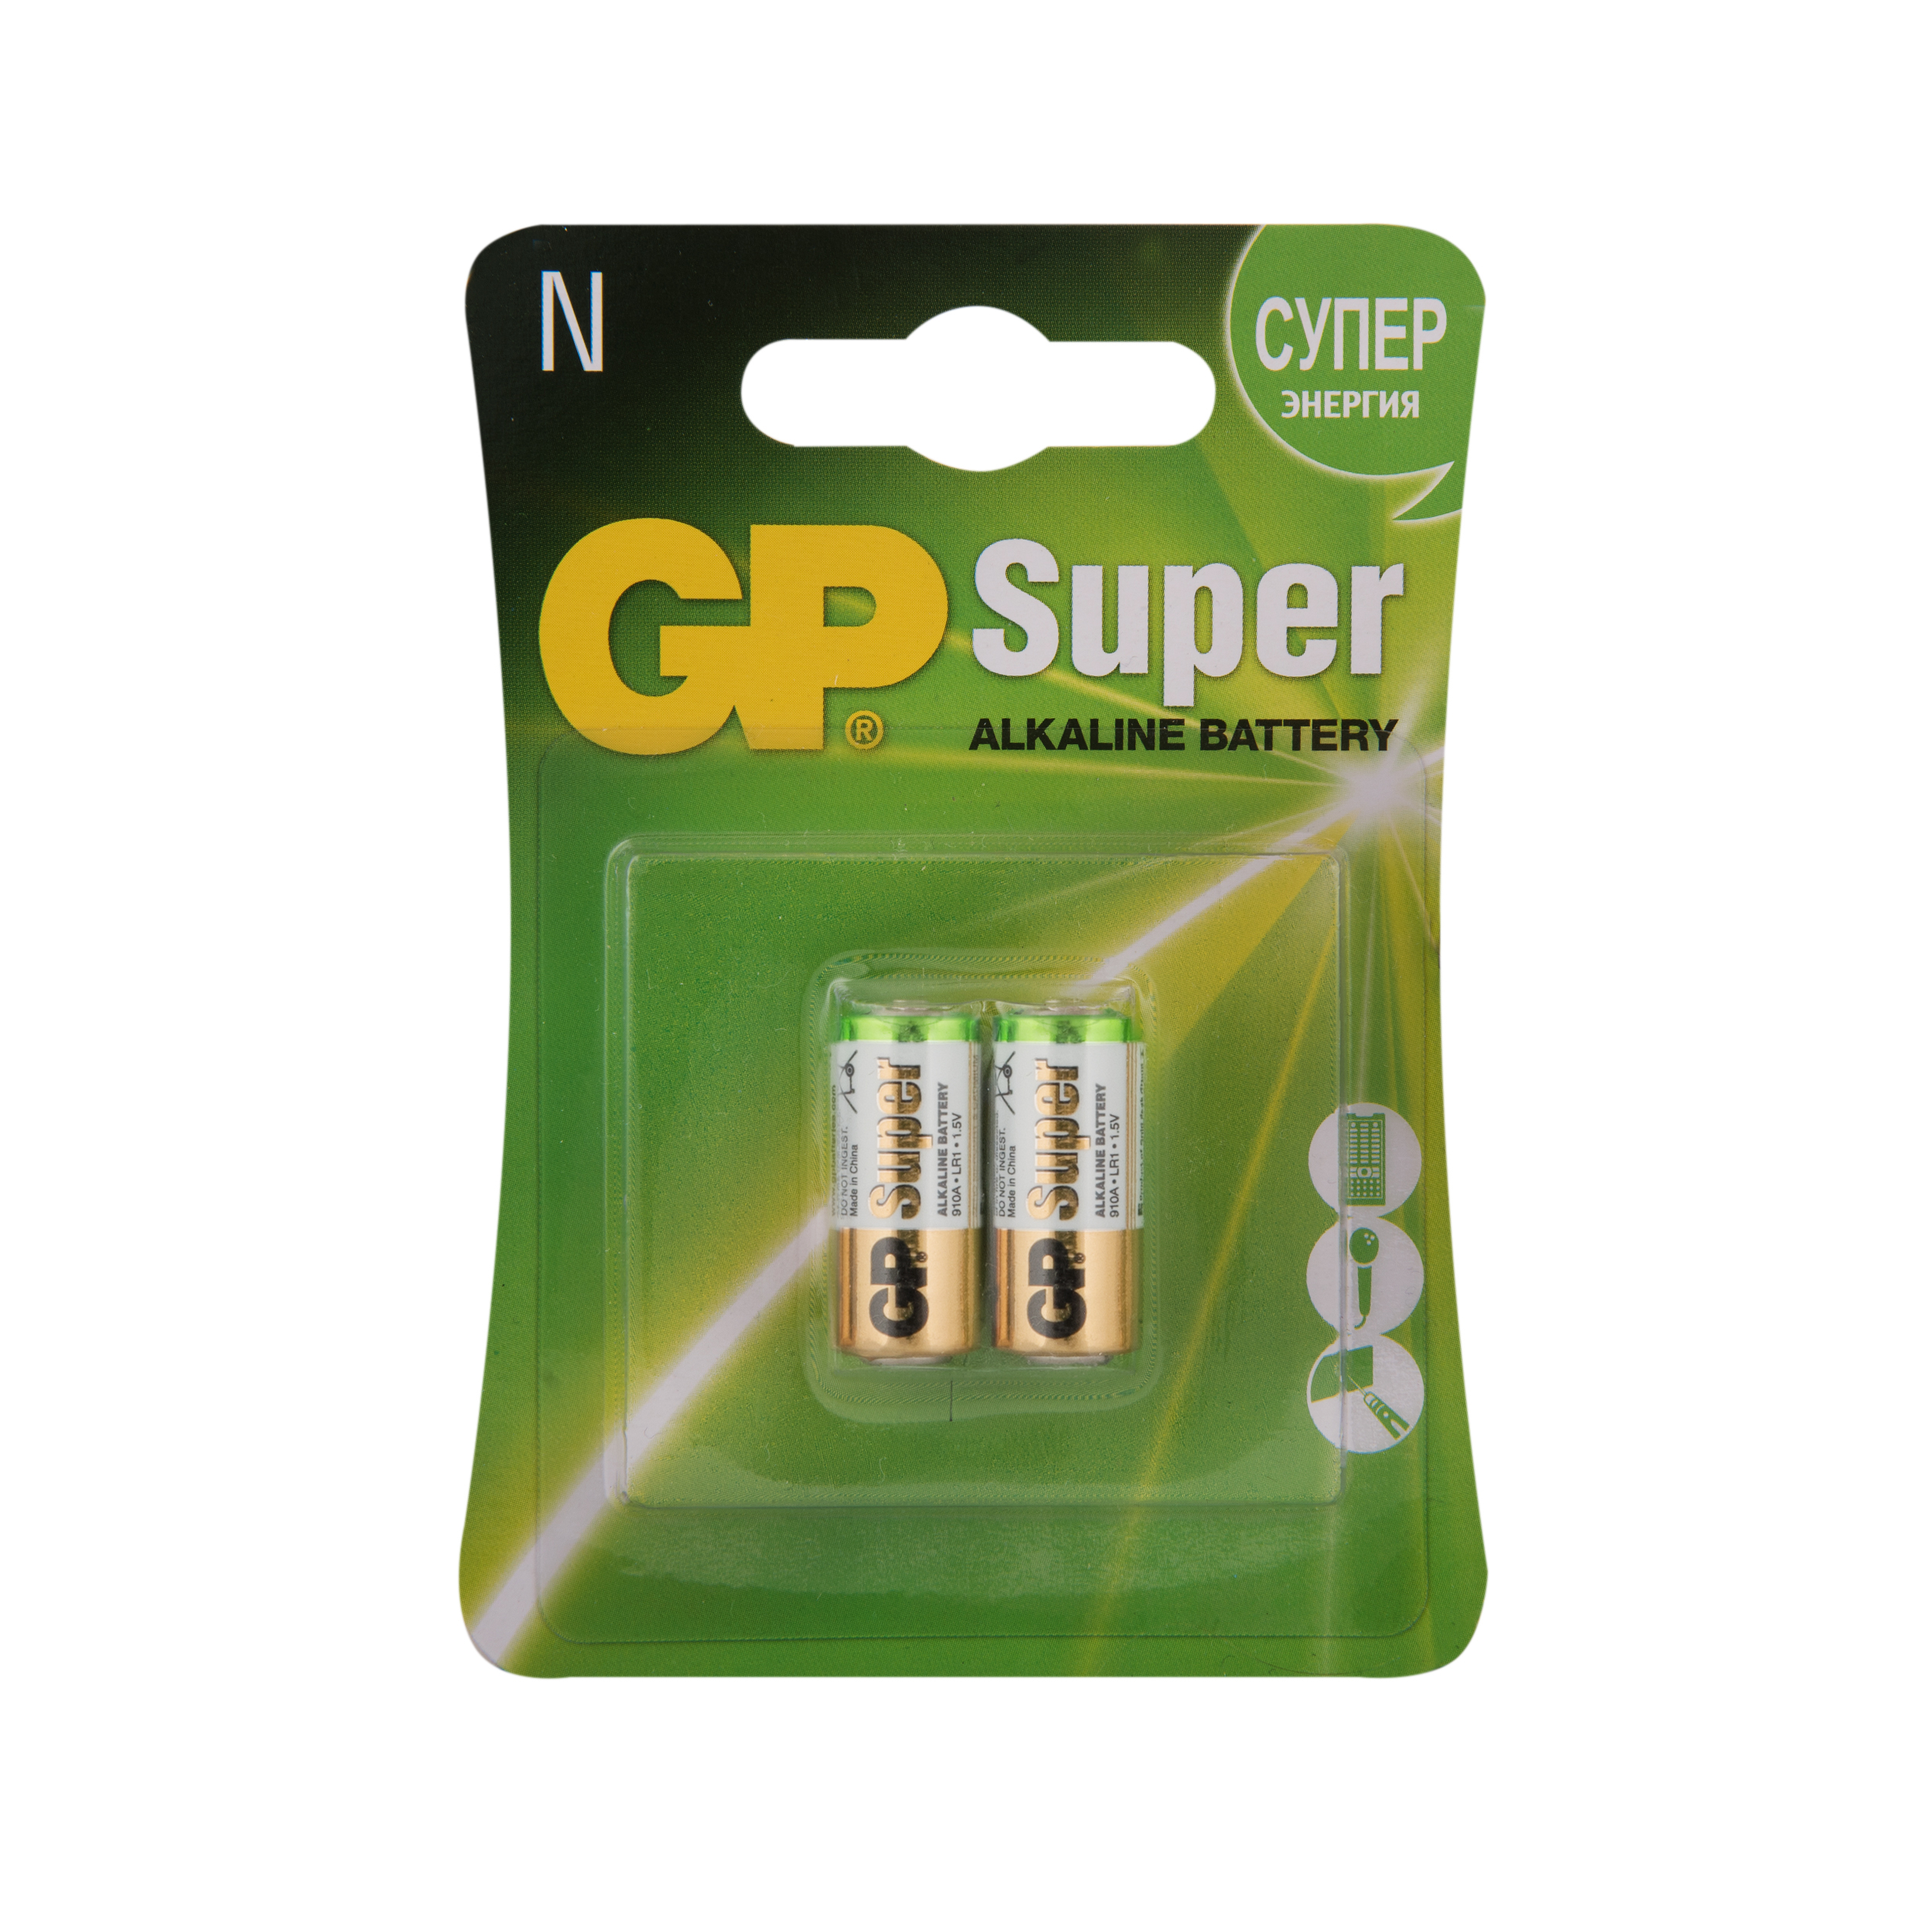 Батарейки питания купить. Батарейка GP super 1604a-cr1 6lr61 bl1. Батарейки GP super Alkaline 1604 (крона, 9v). Батарейки GP super Alkaline 1604 крона 9v 1шт 1604a-cr1. Батарейка GP super крона 6lr61.